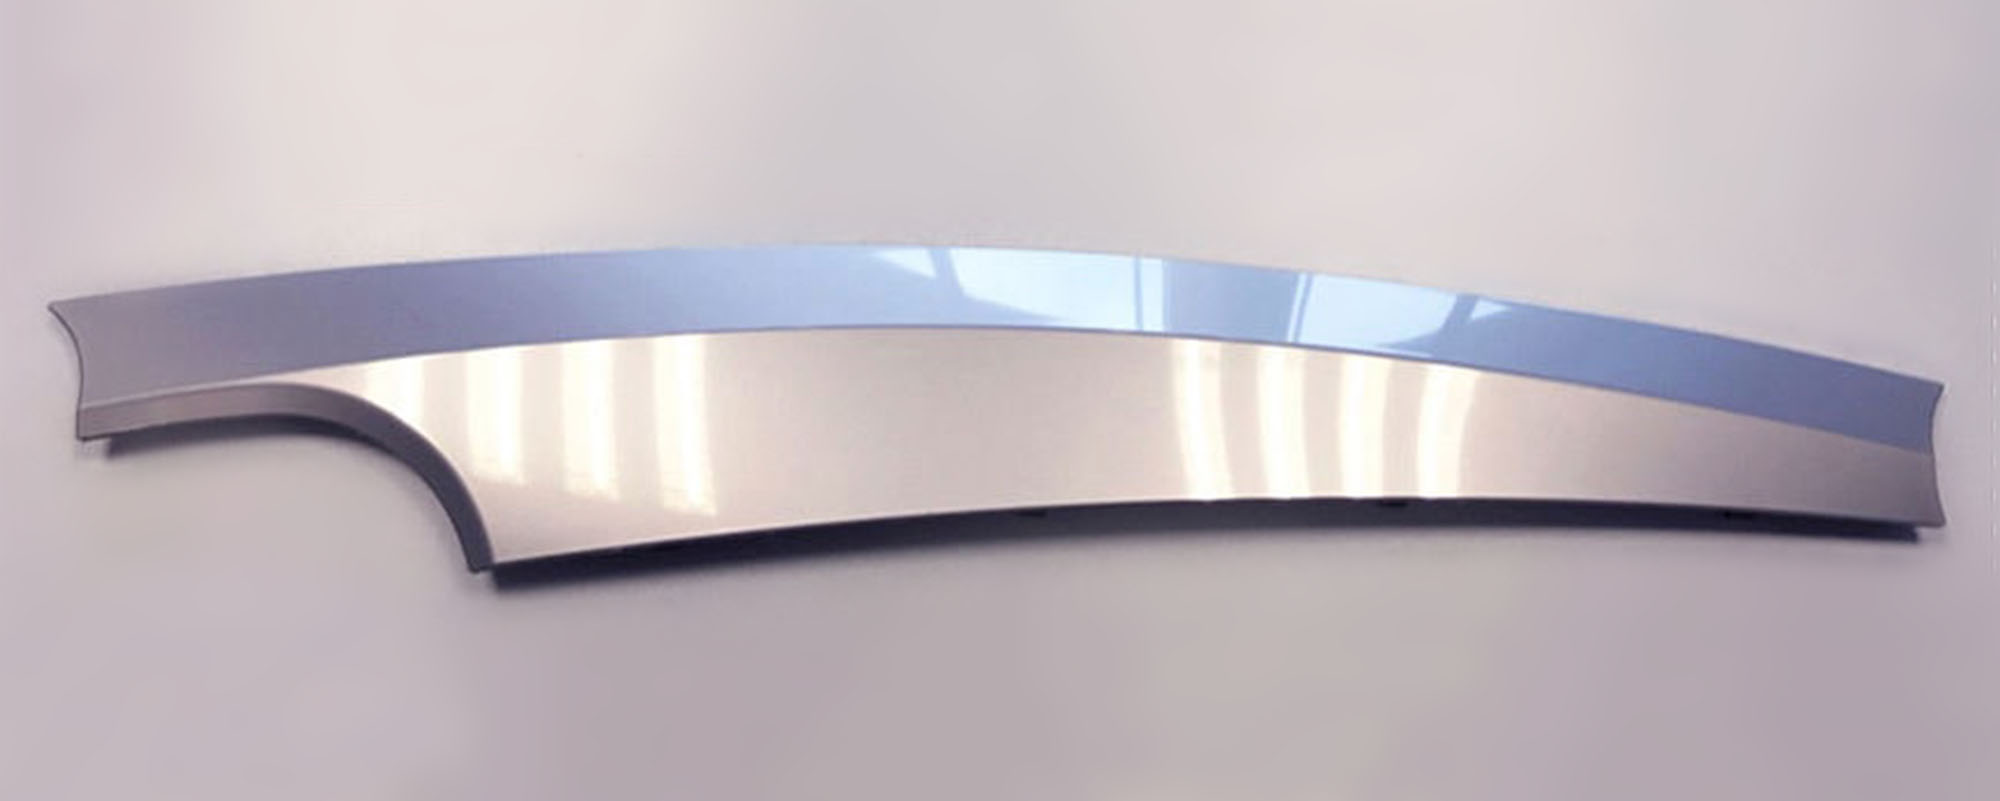 Automotive Türe Kunststoffbauteil Rezyklat Detail metallic silber glänzend 